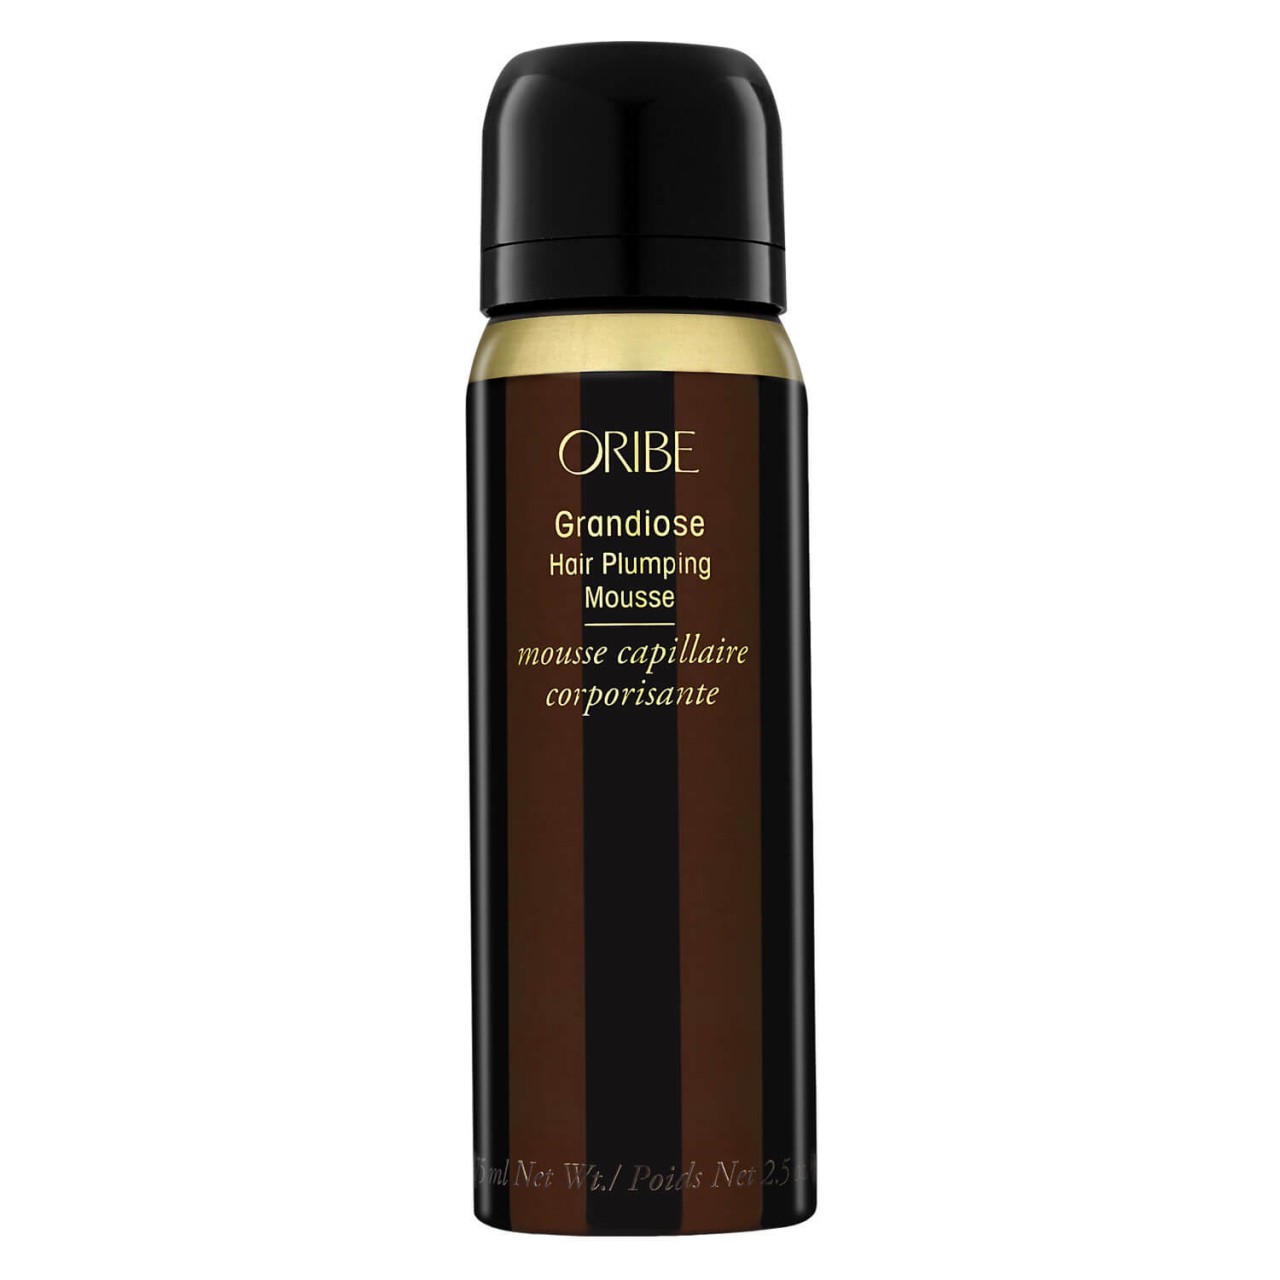 Oribe Style - Grandiose Hair Plumping Mousse von Oribe